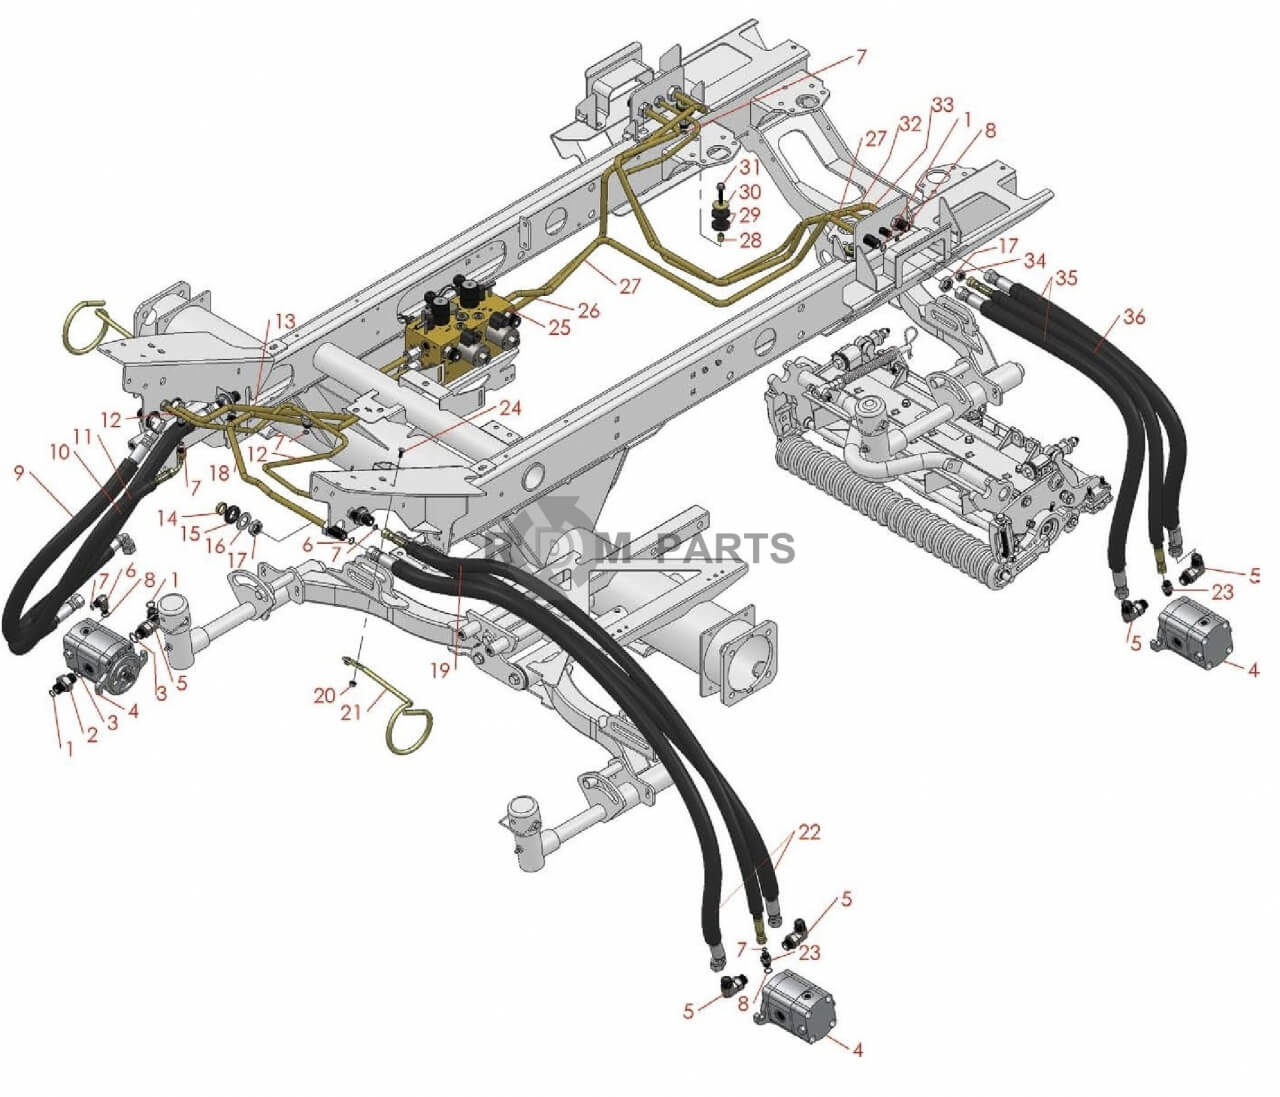 Replacement parts for RM 5210D 5410D 5510D & 5610D Reel hydraulics